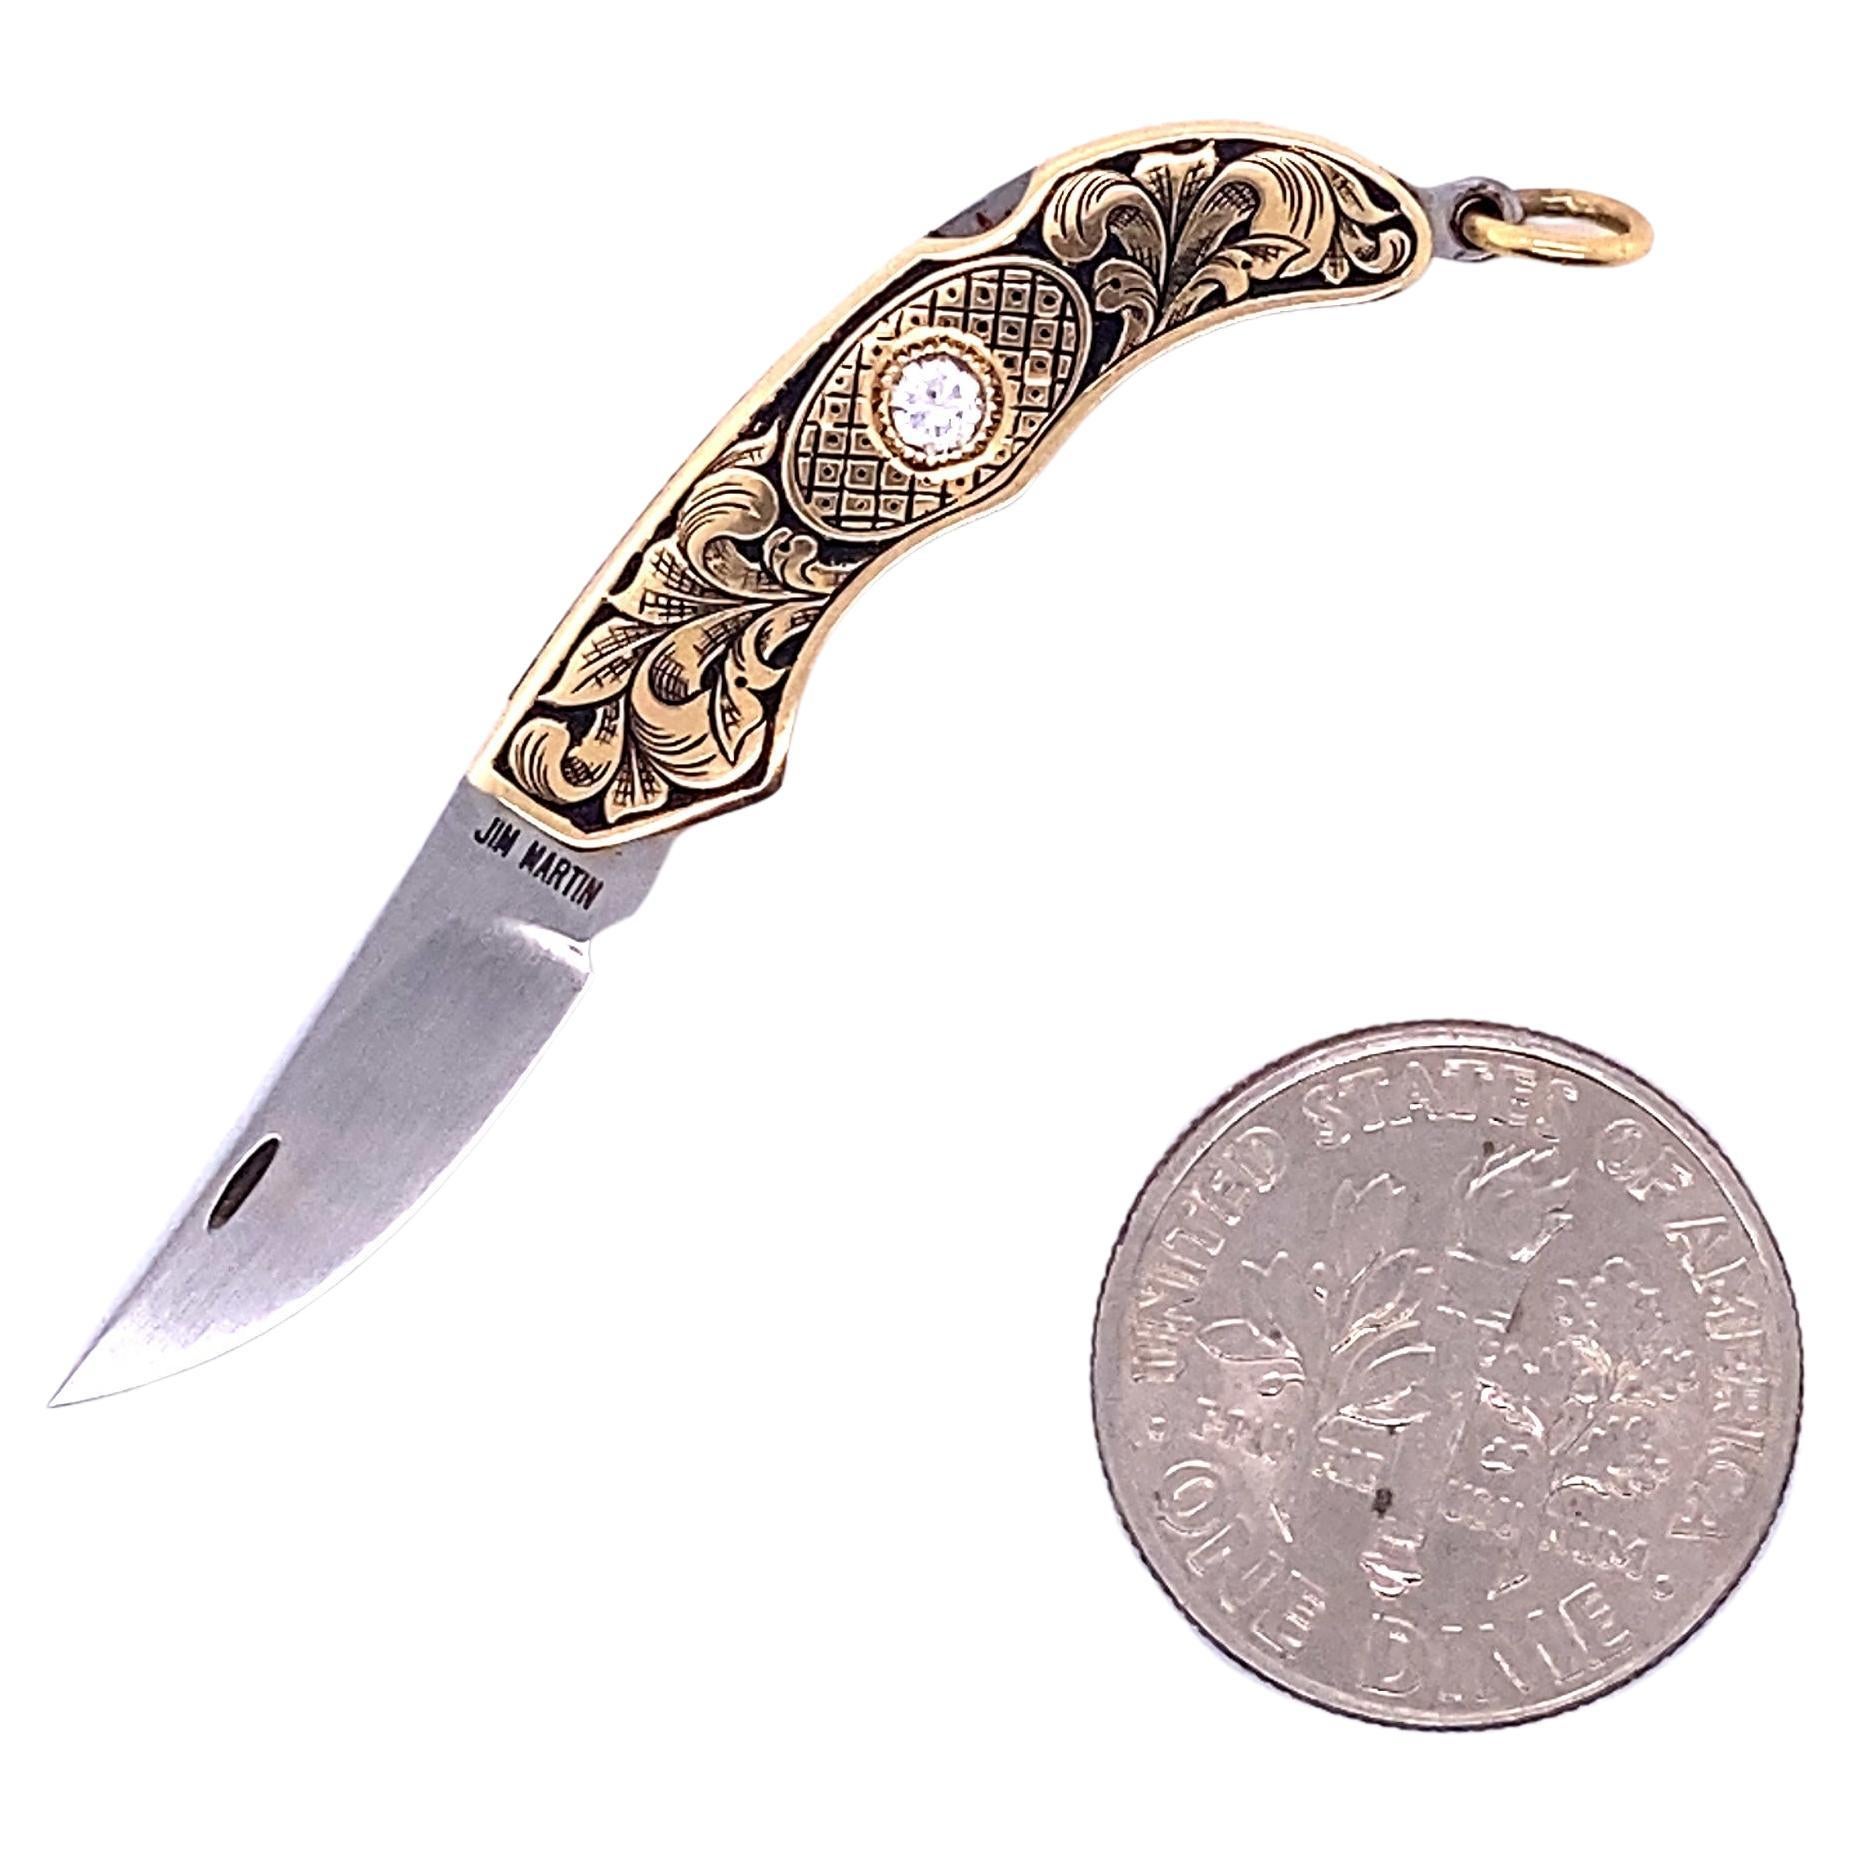 Rare Jim Martin Miniature 14K Gold Miniature Knife Necklace Pendant with Diamond